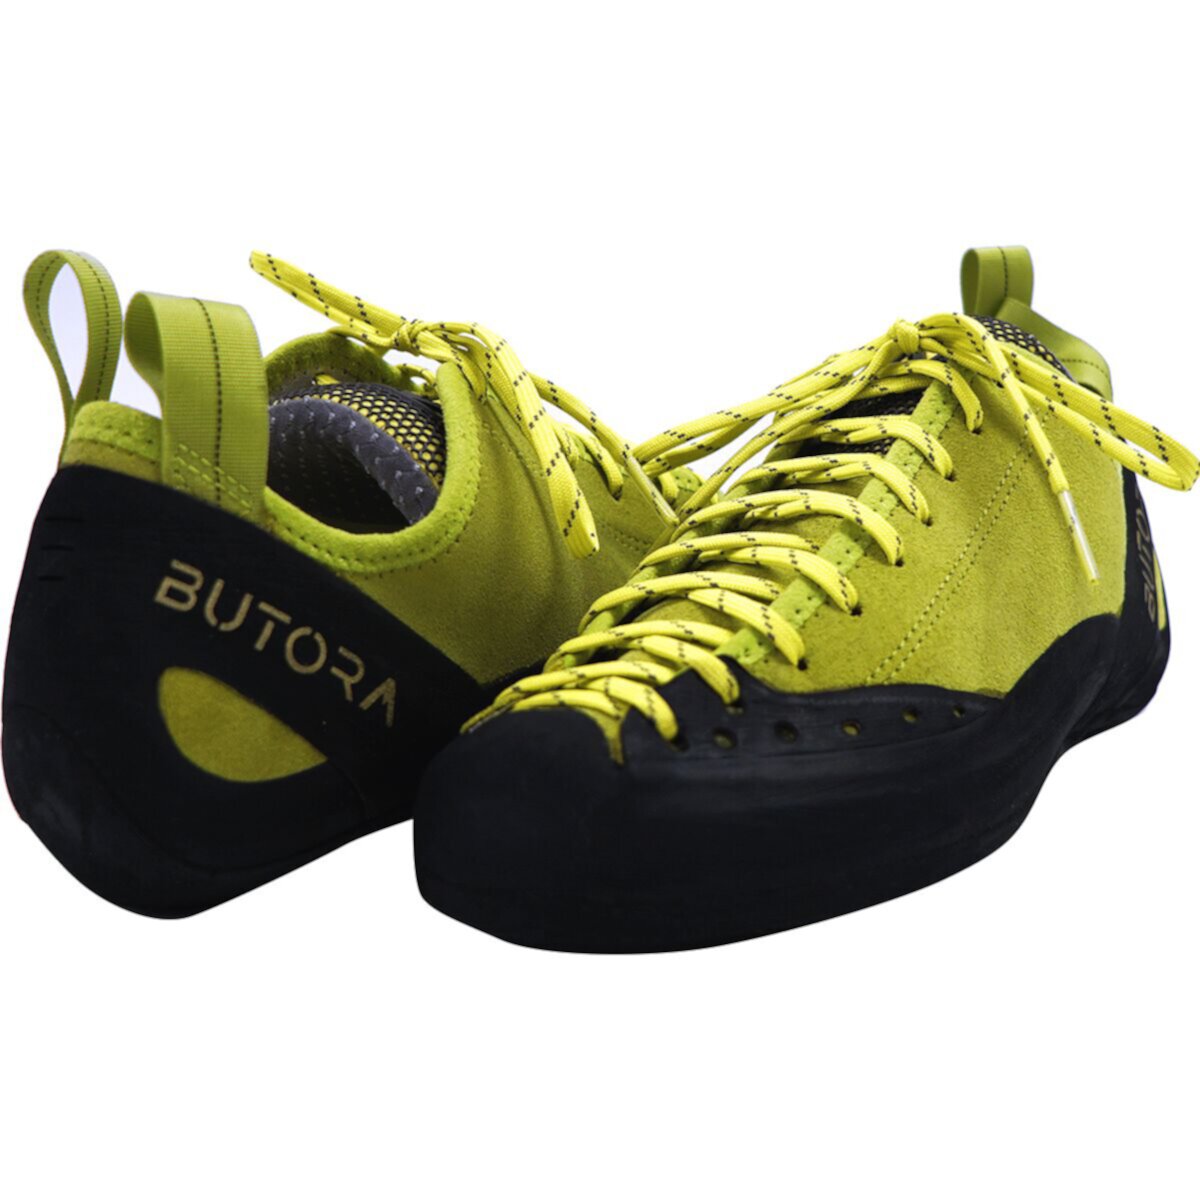 Ботинки для скалолазания Butora Mantra Wide Fit Butora